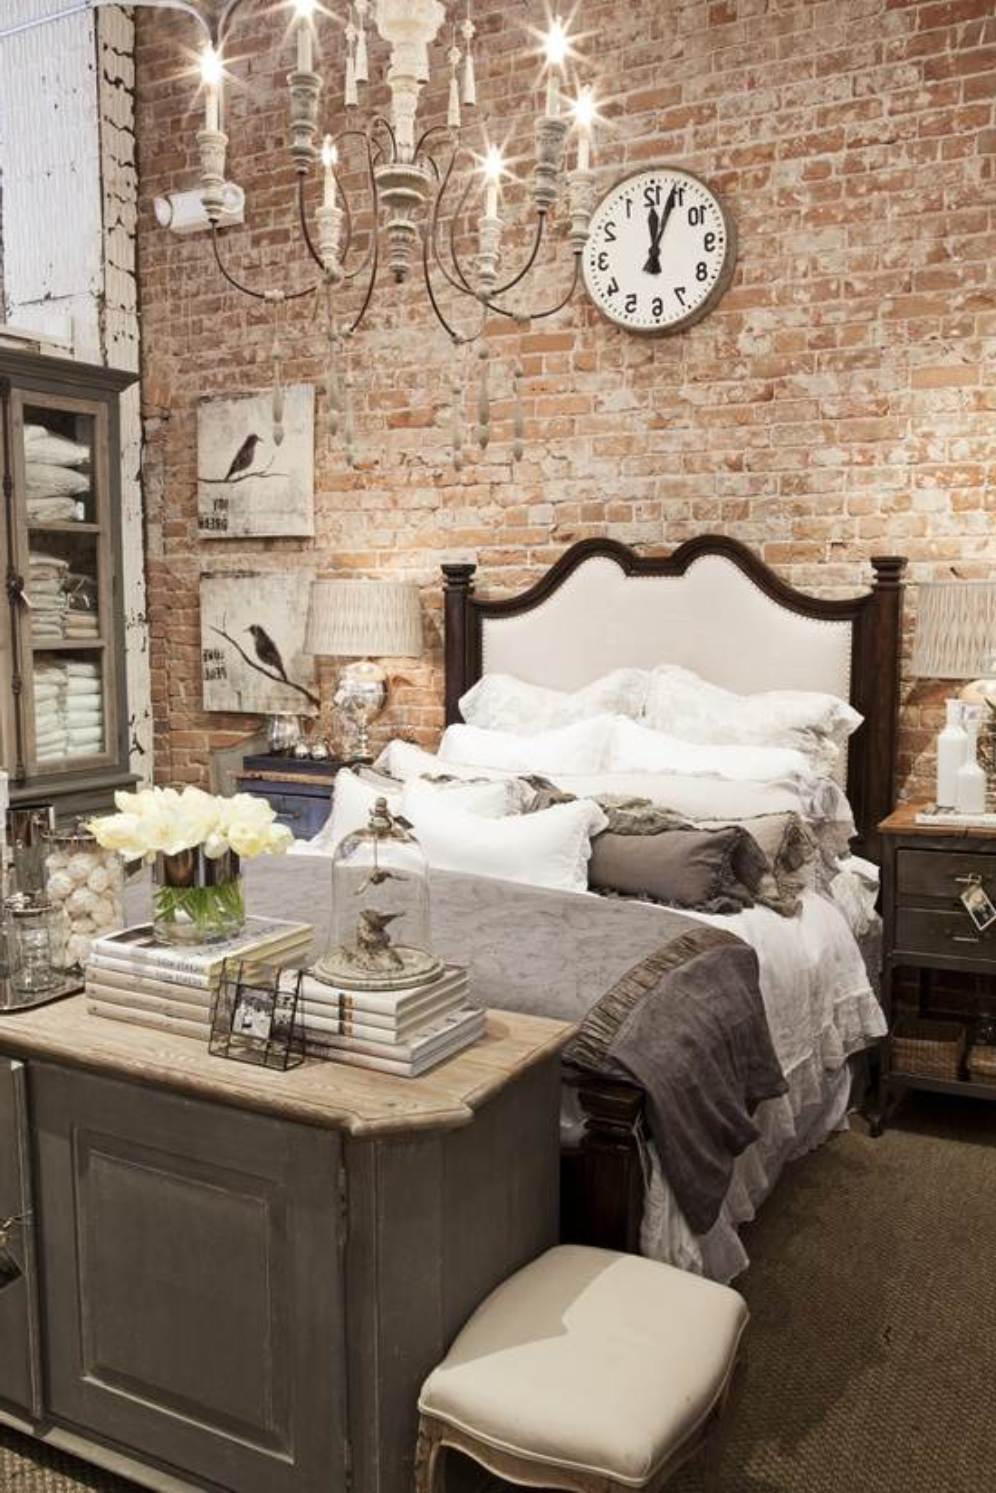 romantic bedroom ideas with exposed bricks